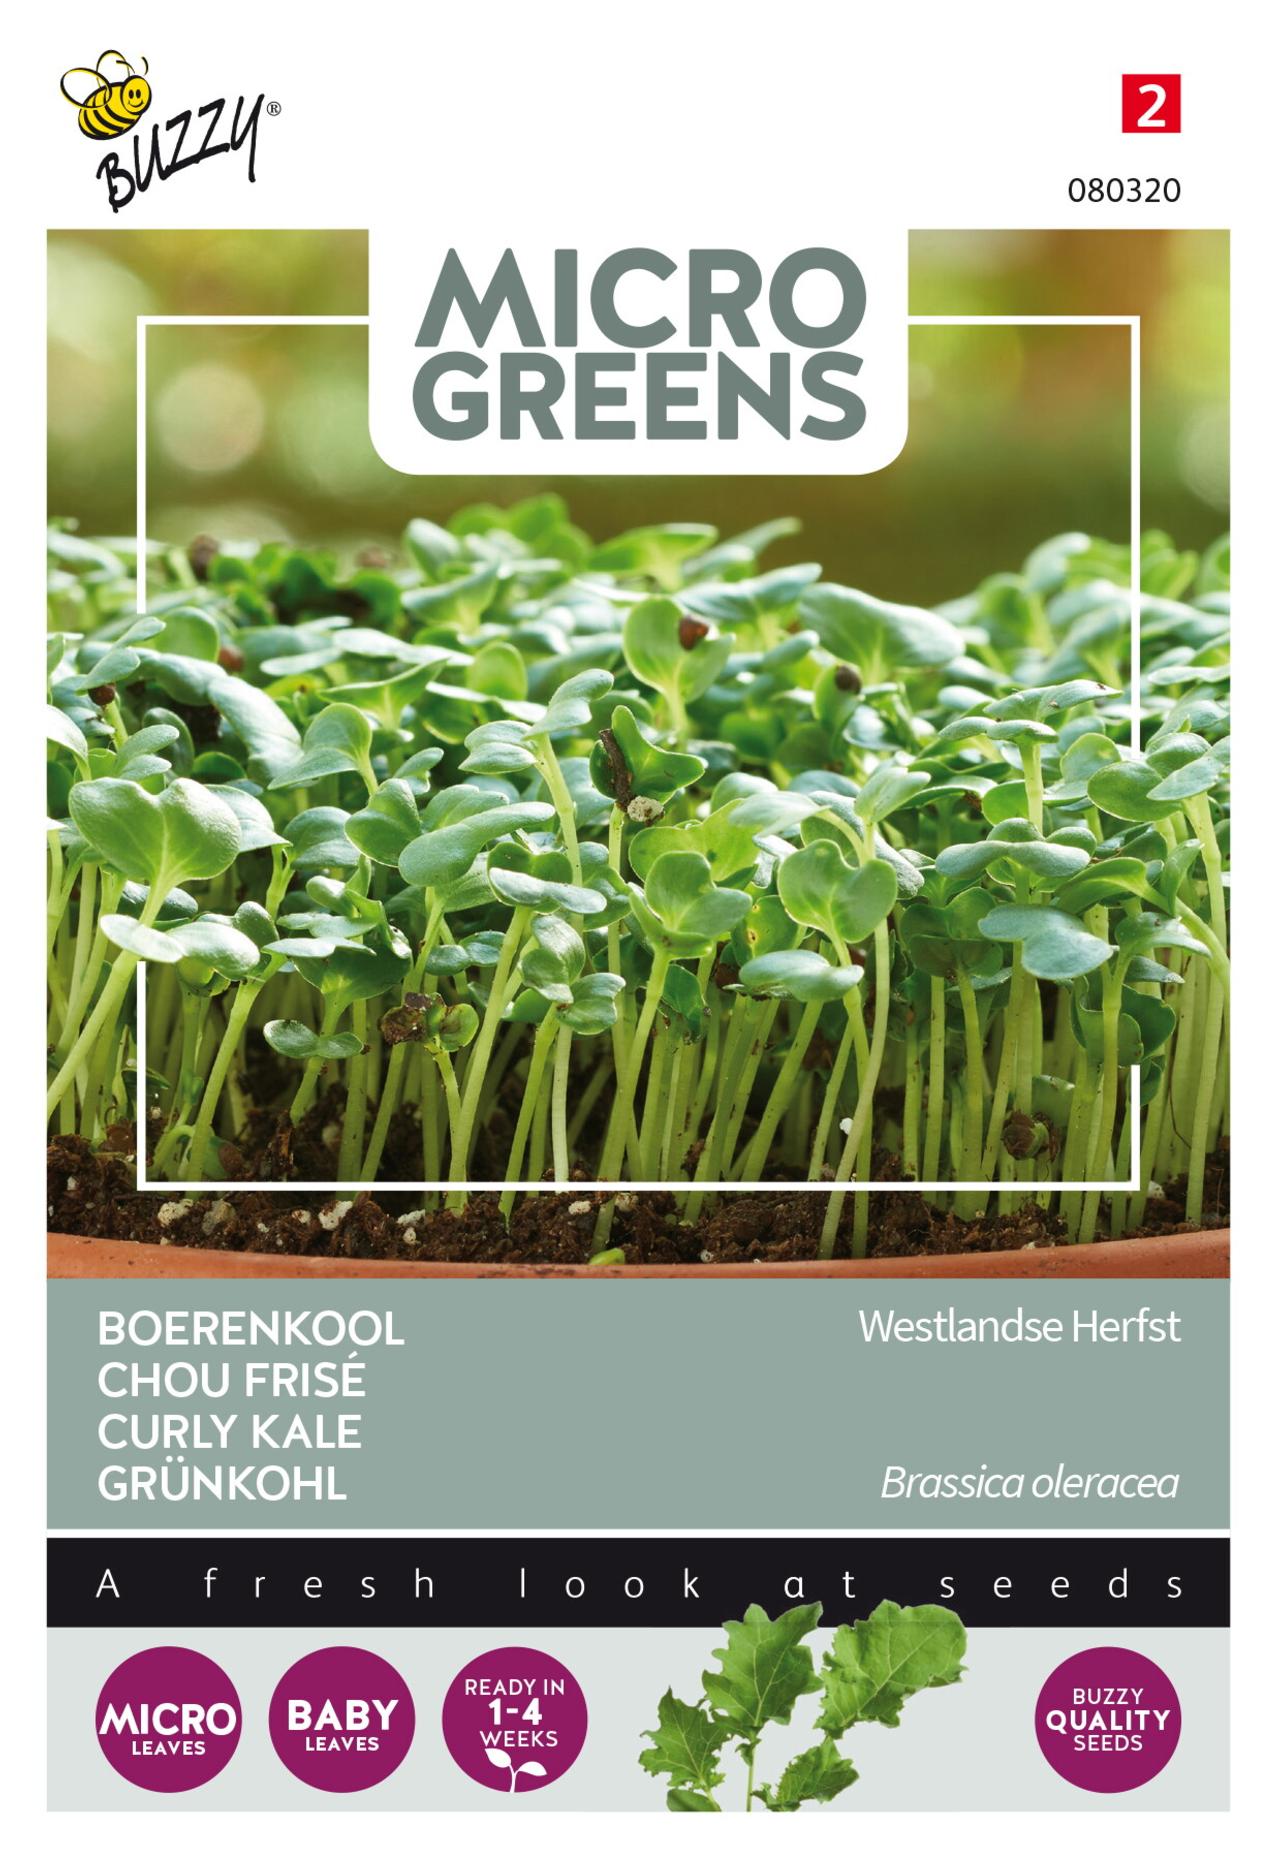 Brassica oleracea 'Westlandse Herfst' (microgreens) plant